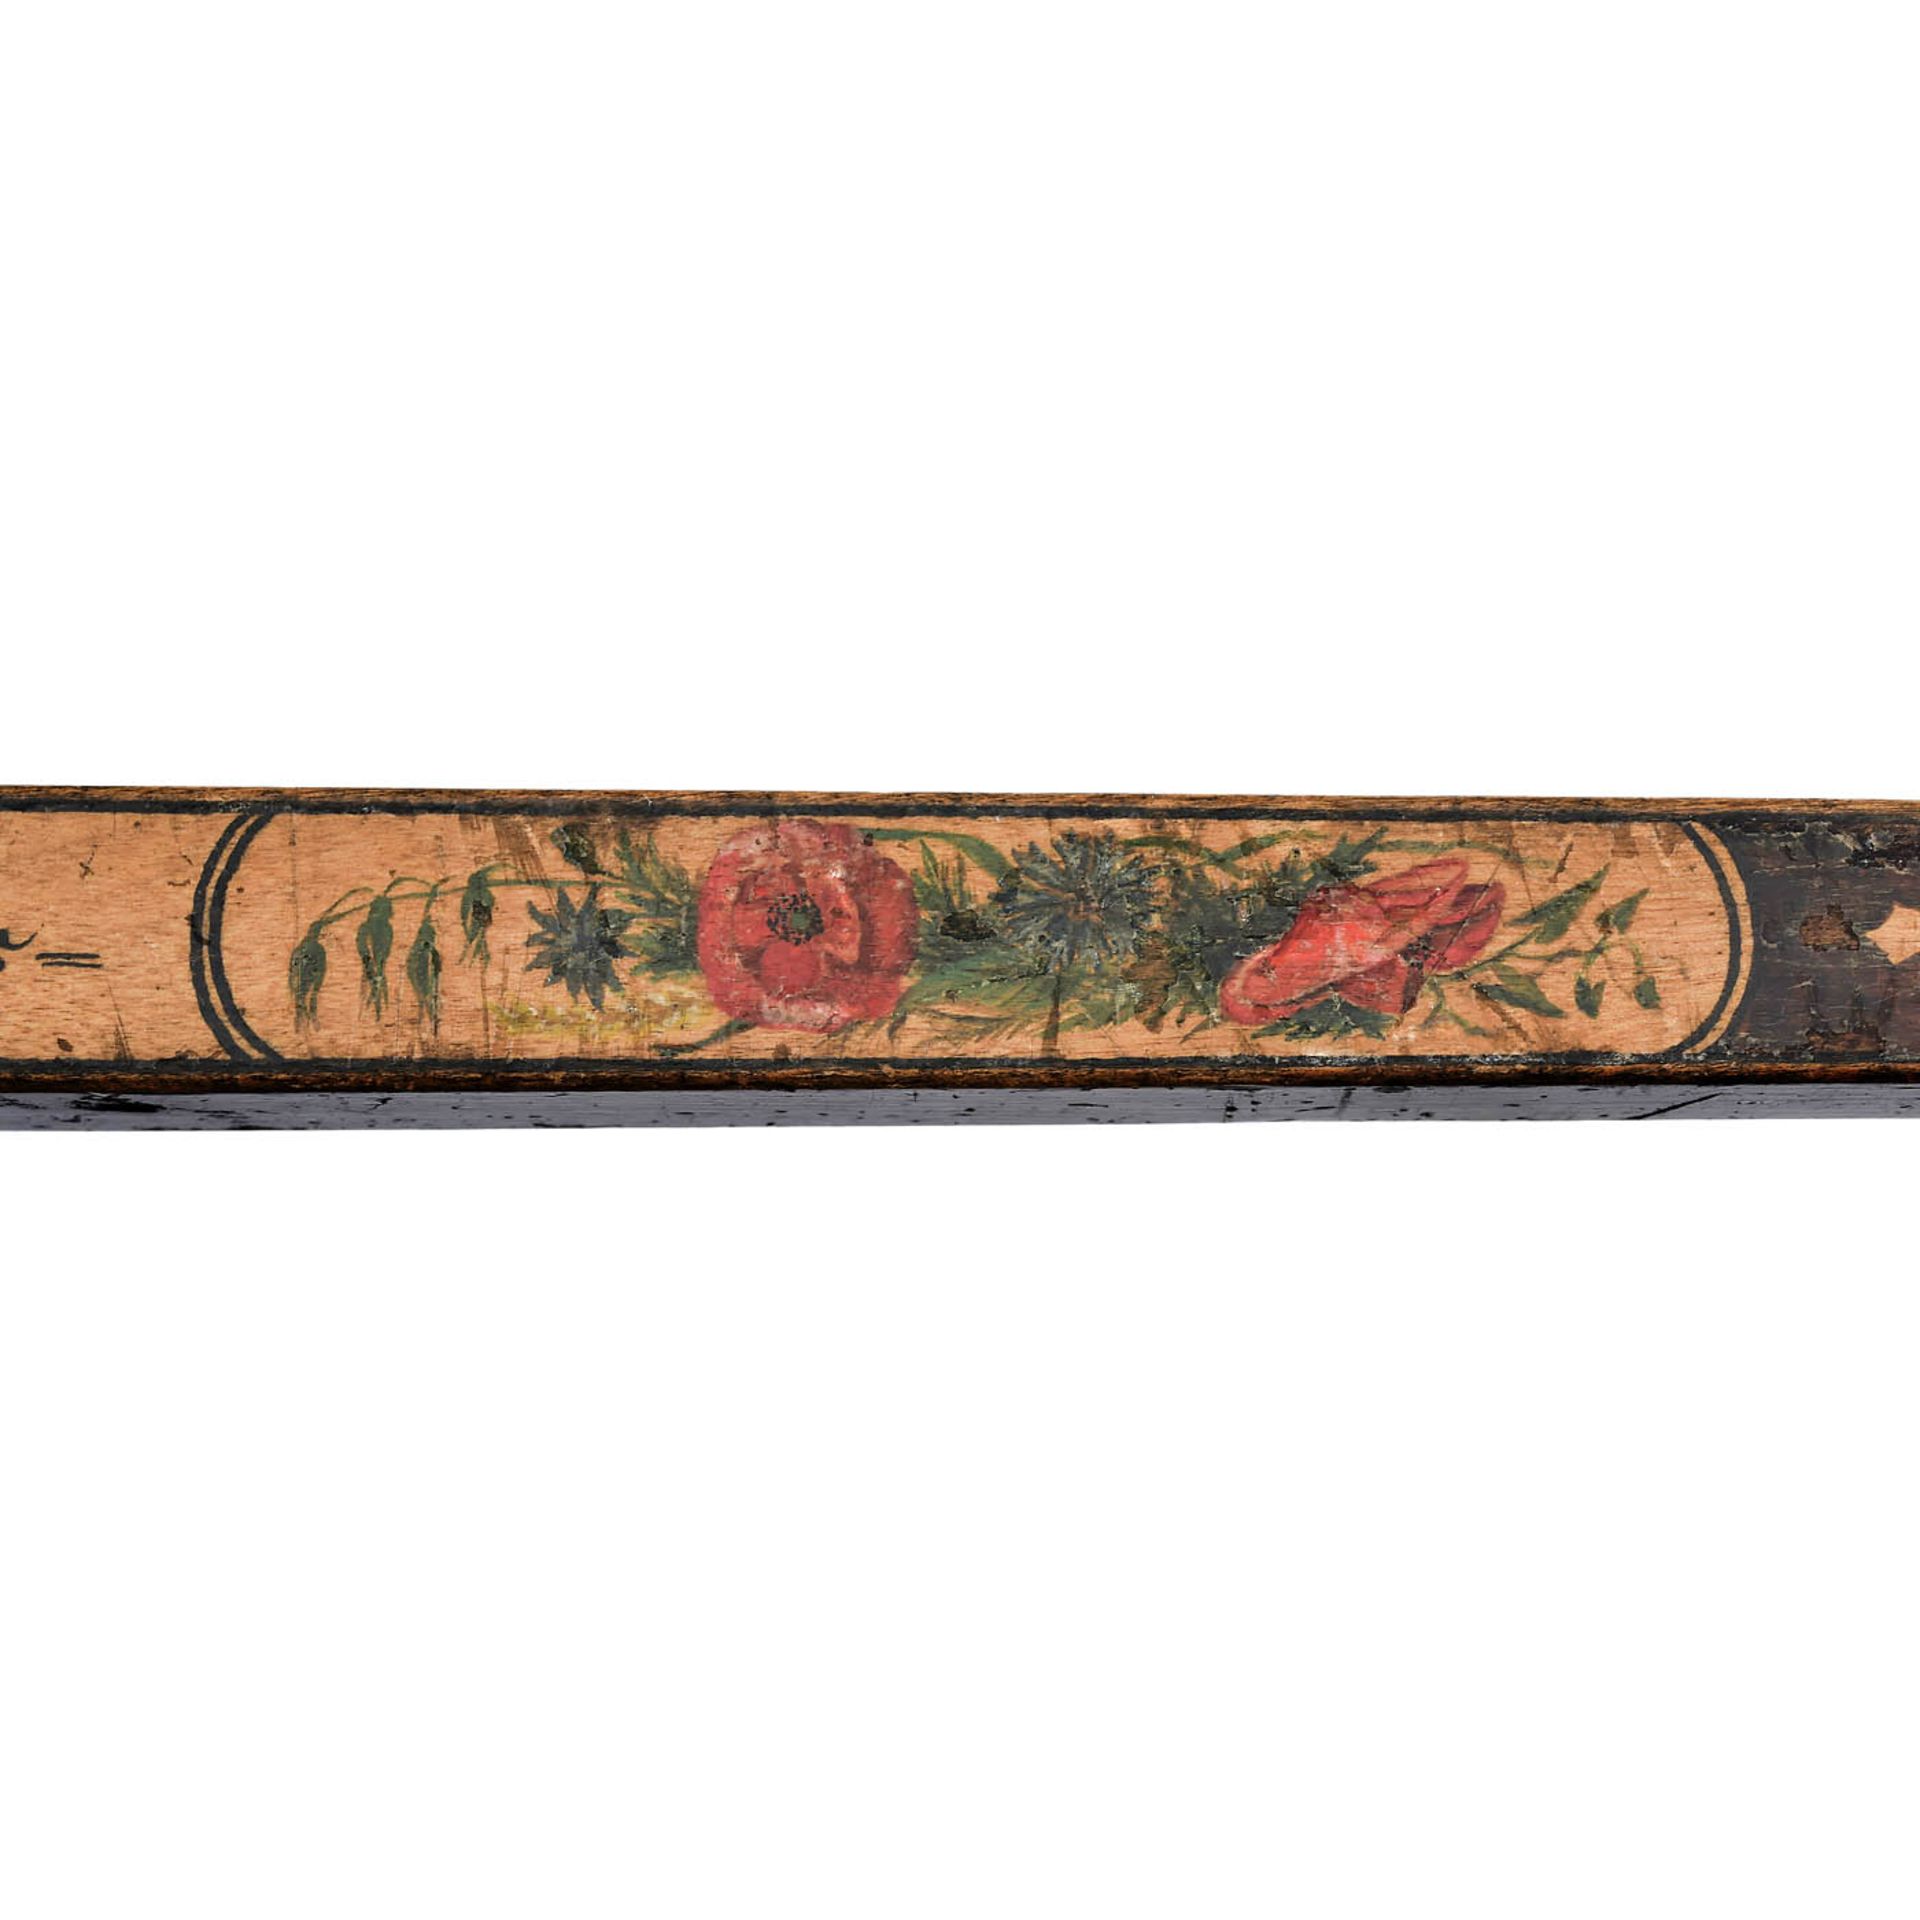 2 Ornately Crafted German Tailor's Scrolls, c. 1820-30 - Bild 4 aus 4